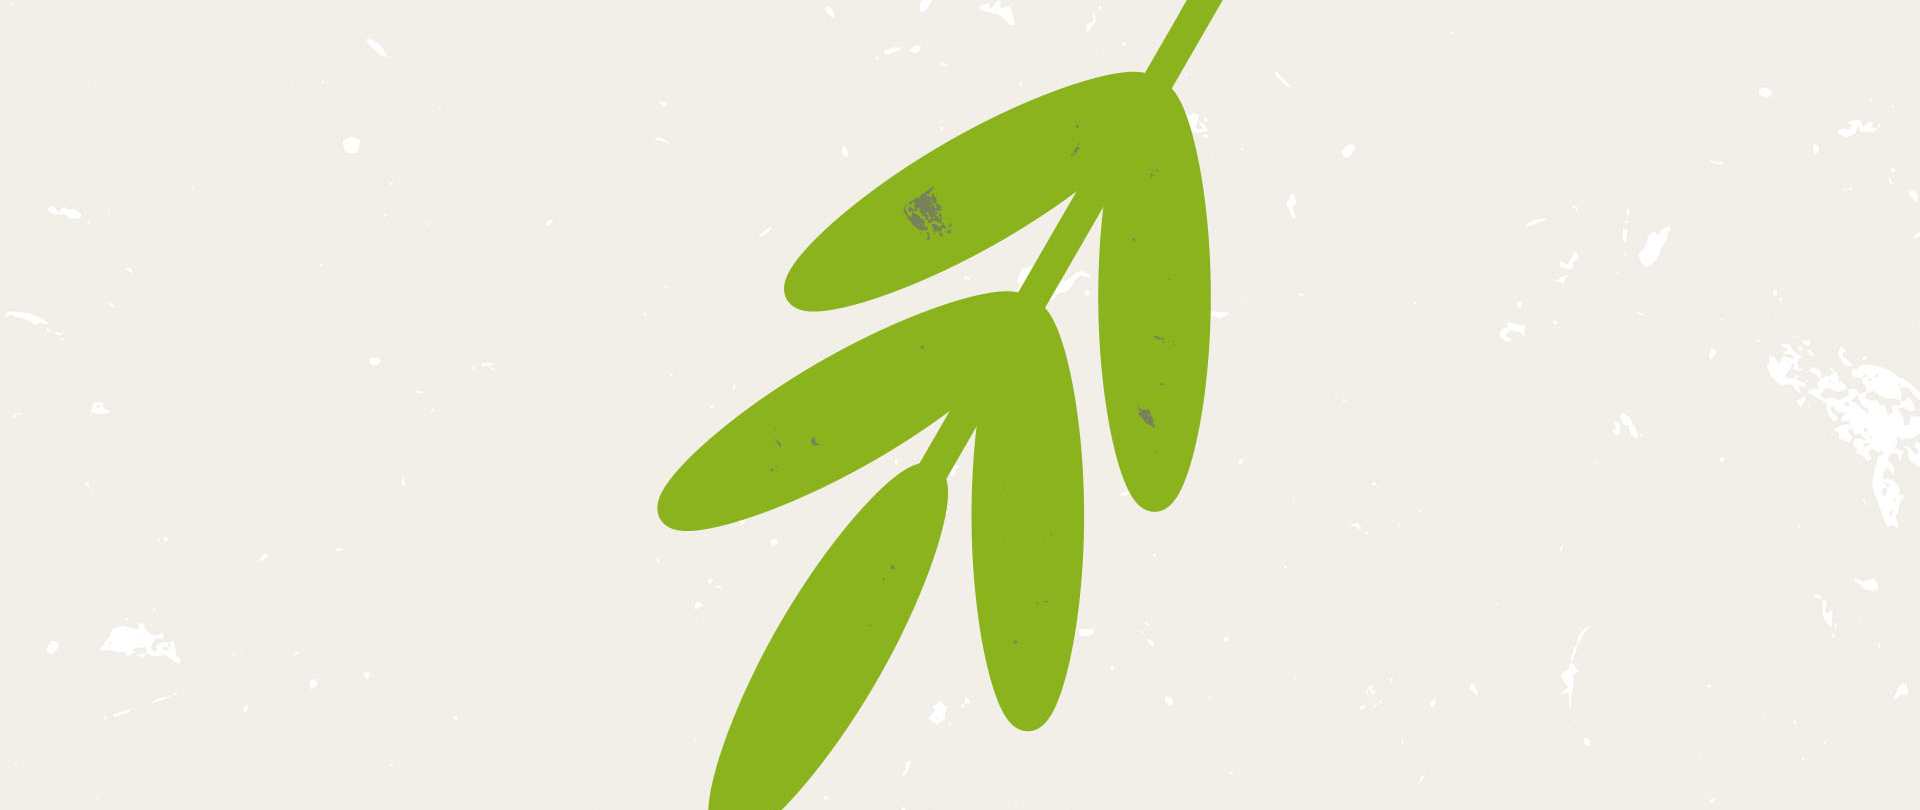 Herb illustration